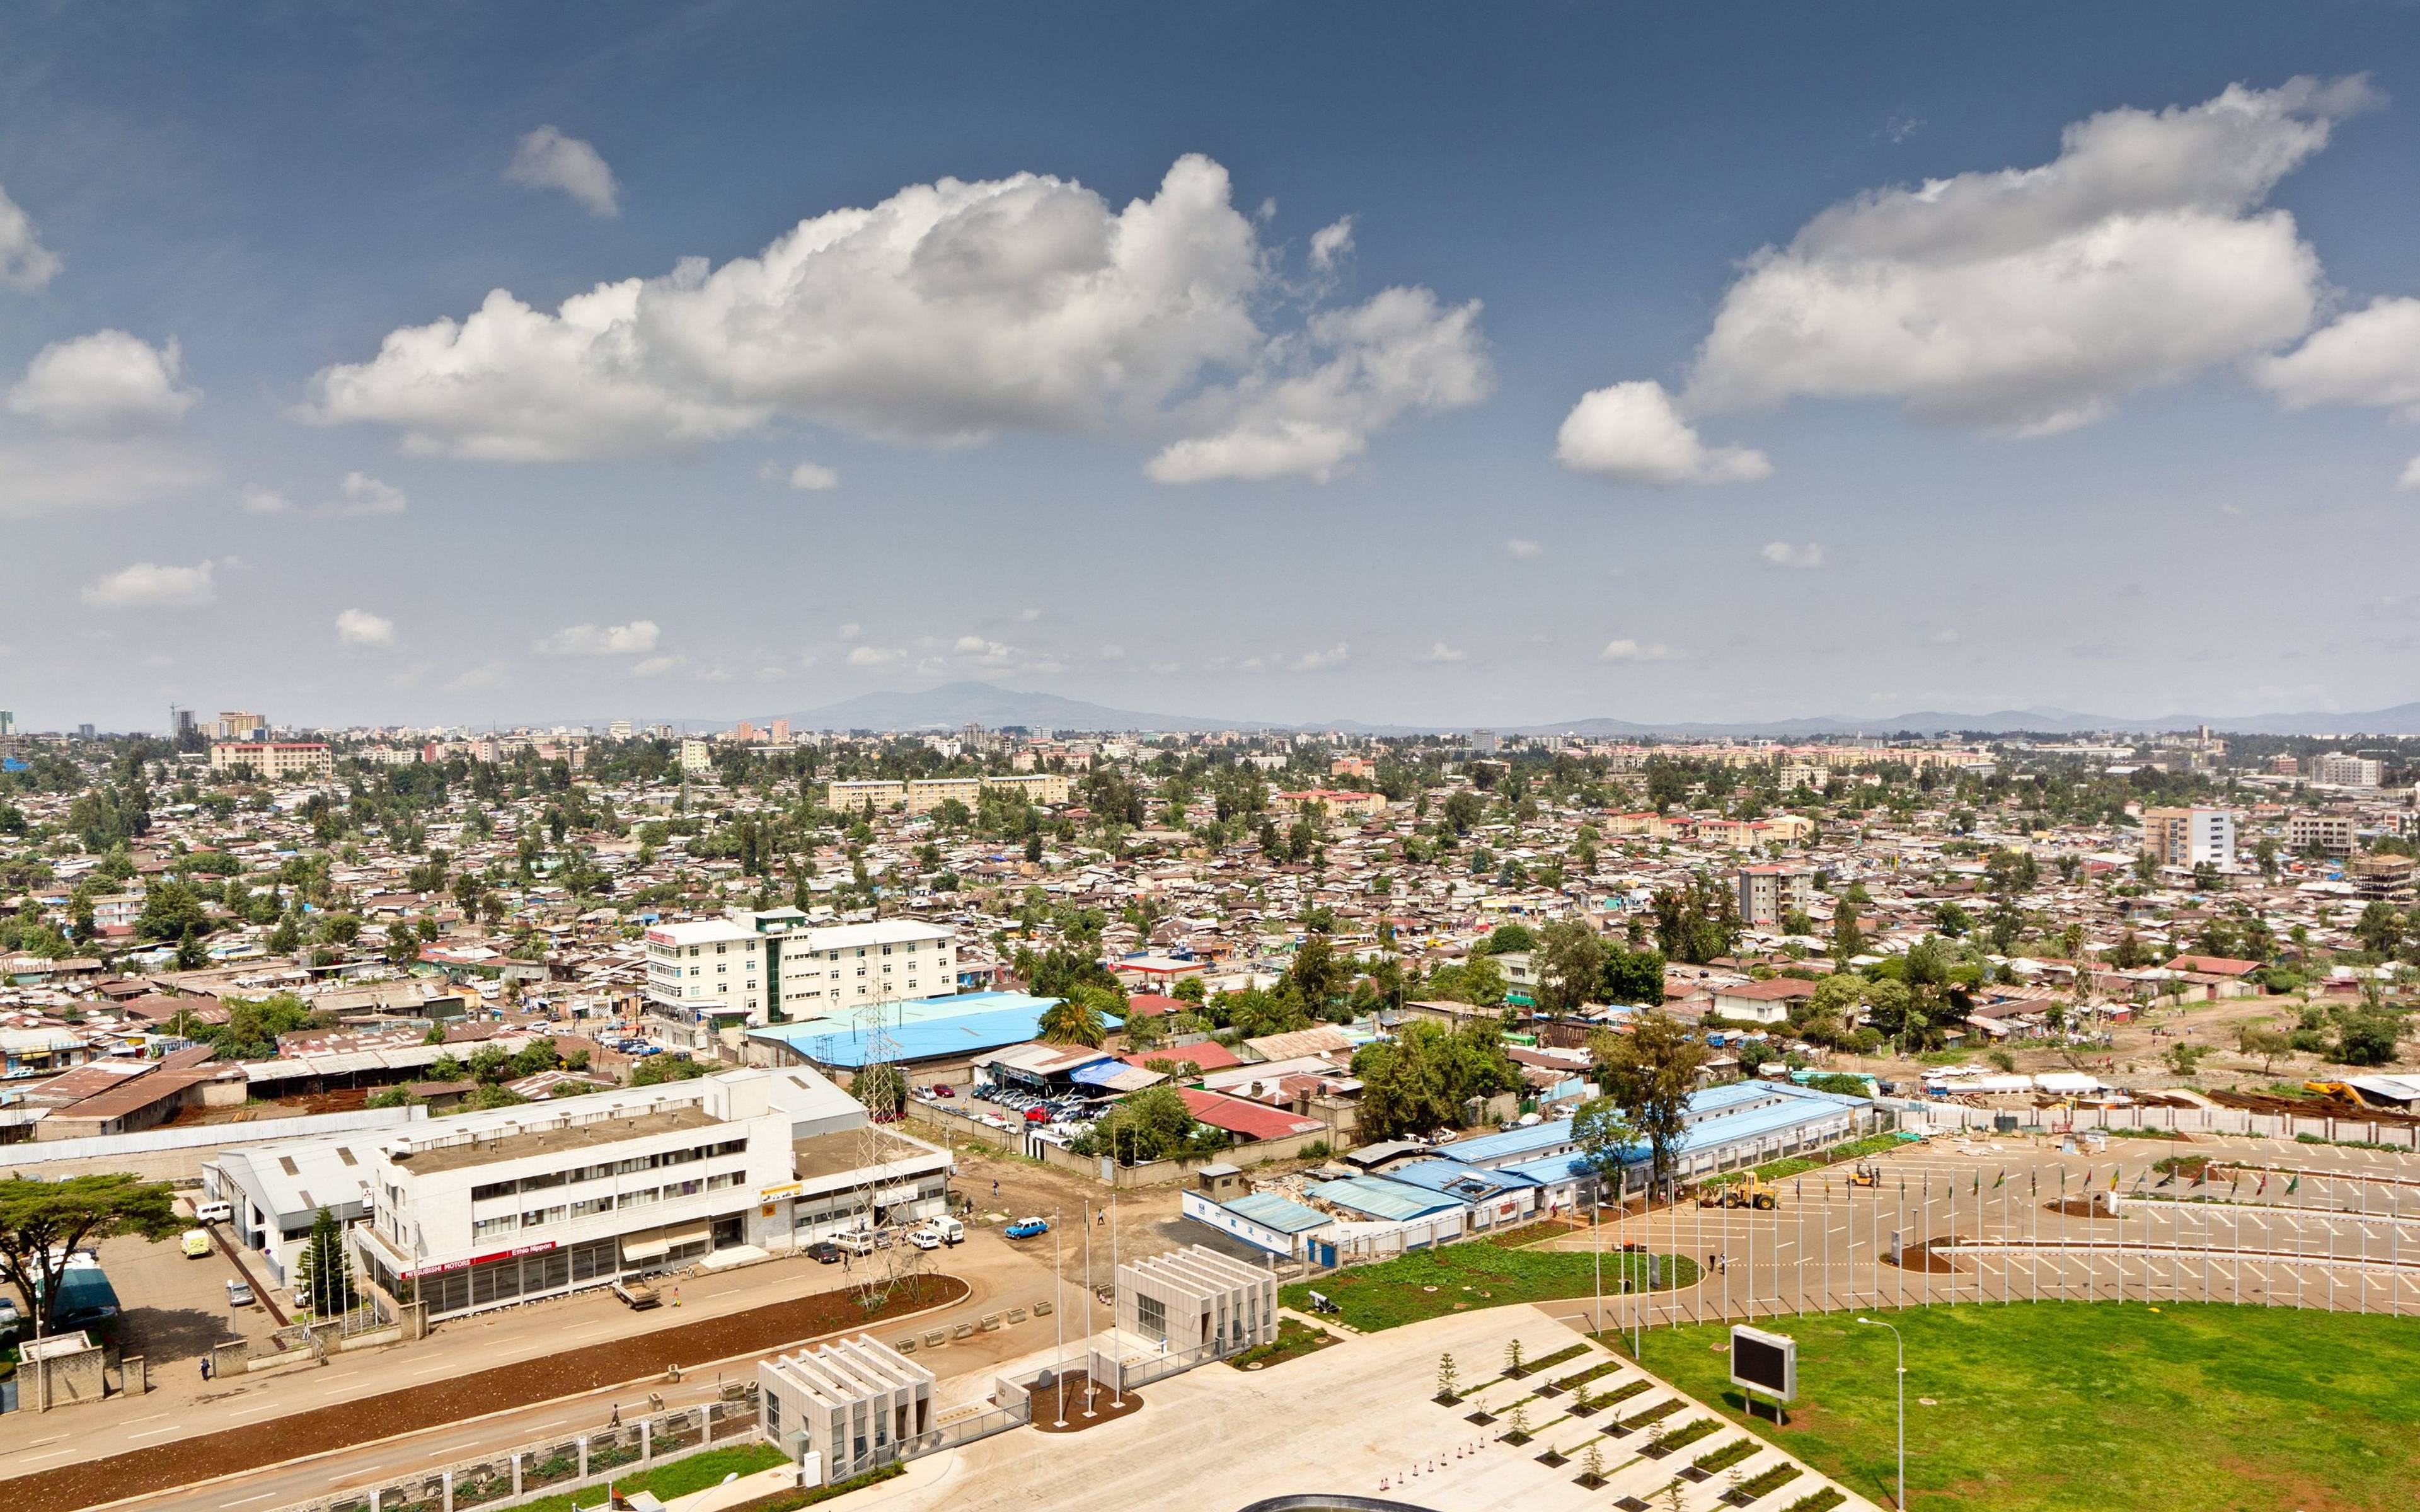 Es hora de regresar: desde Lalibela a Addis Abeba 